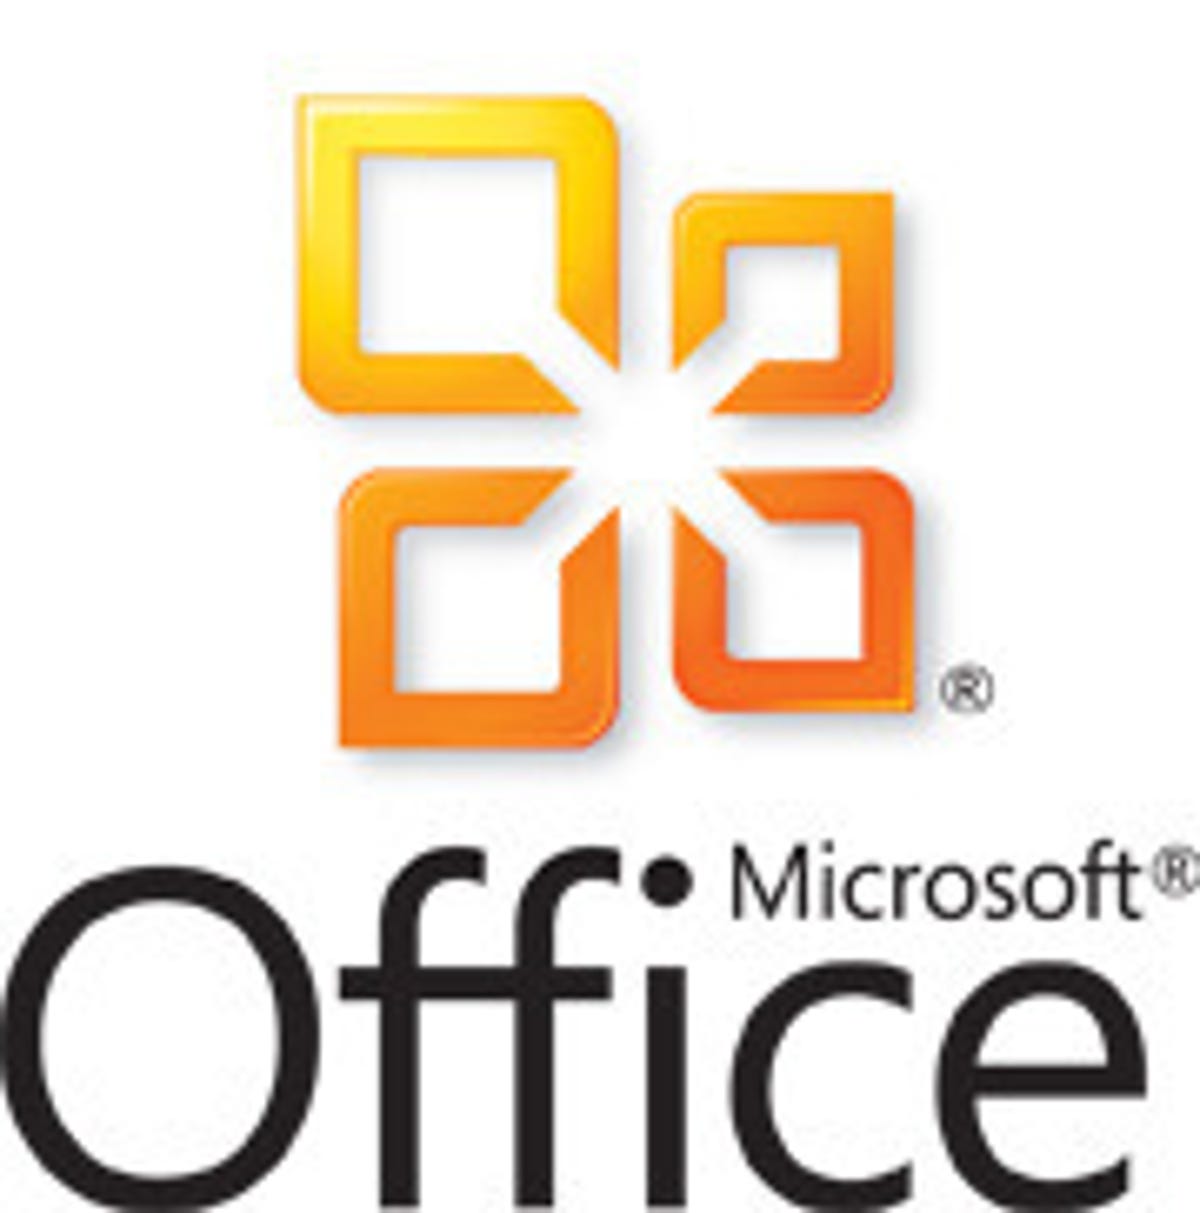 MS office logo